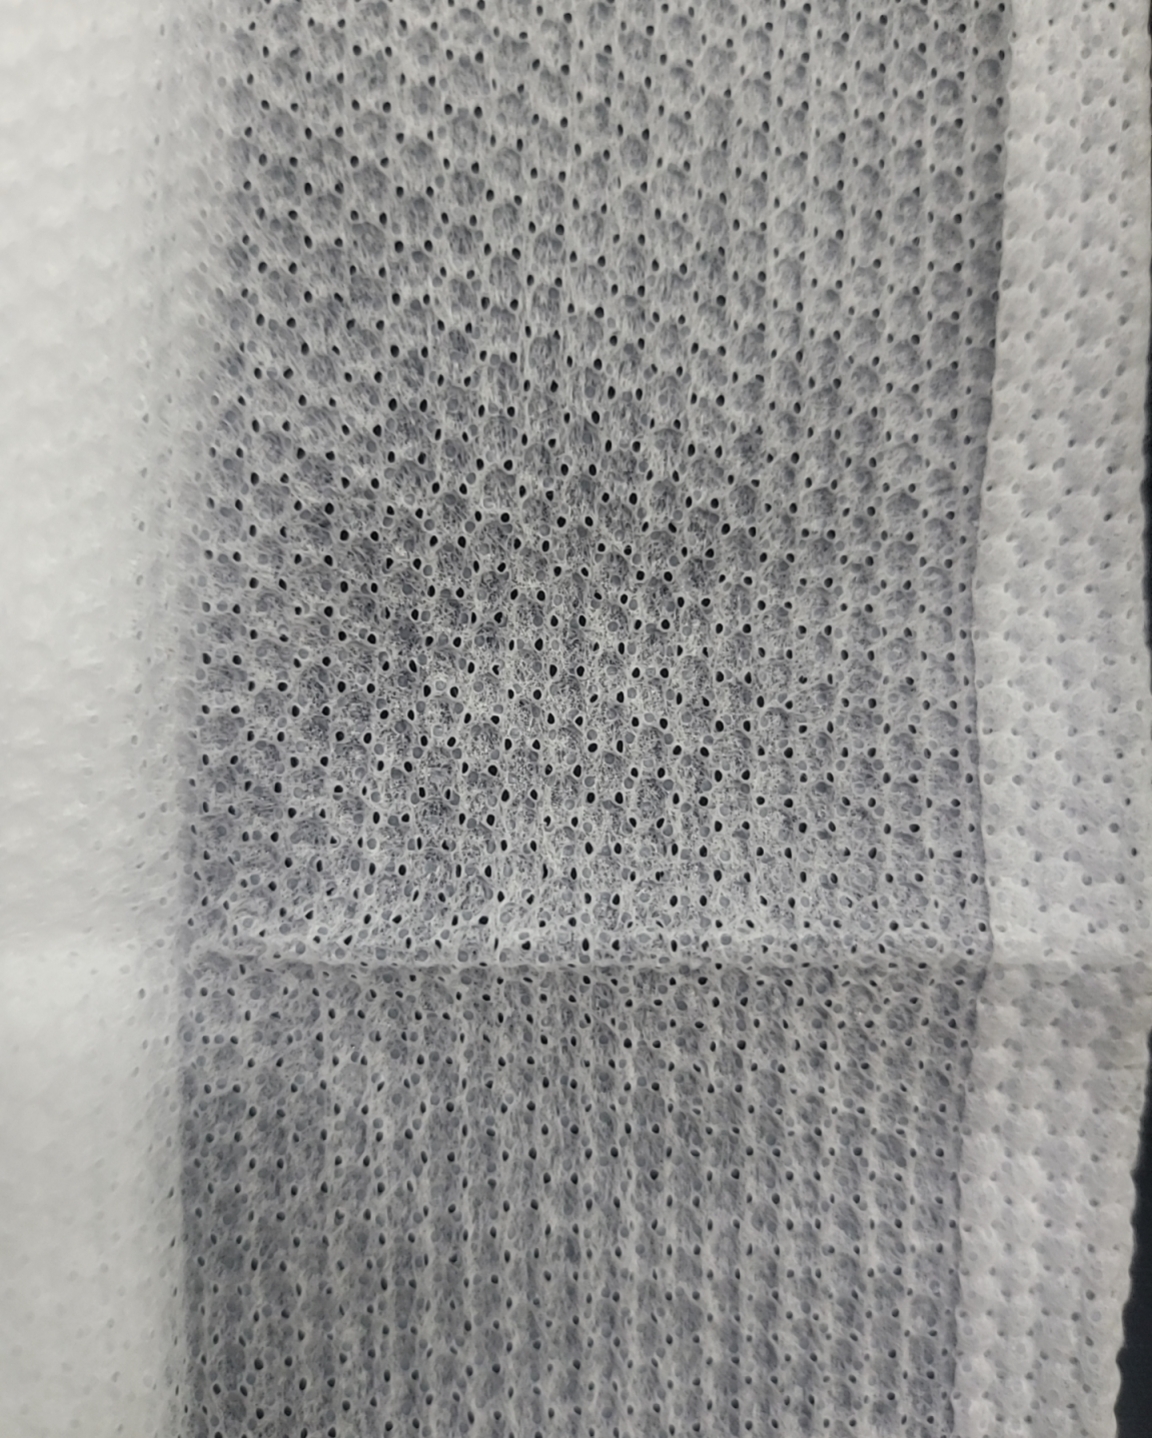 Hydrophobic Nonwoven fabric